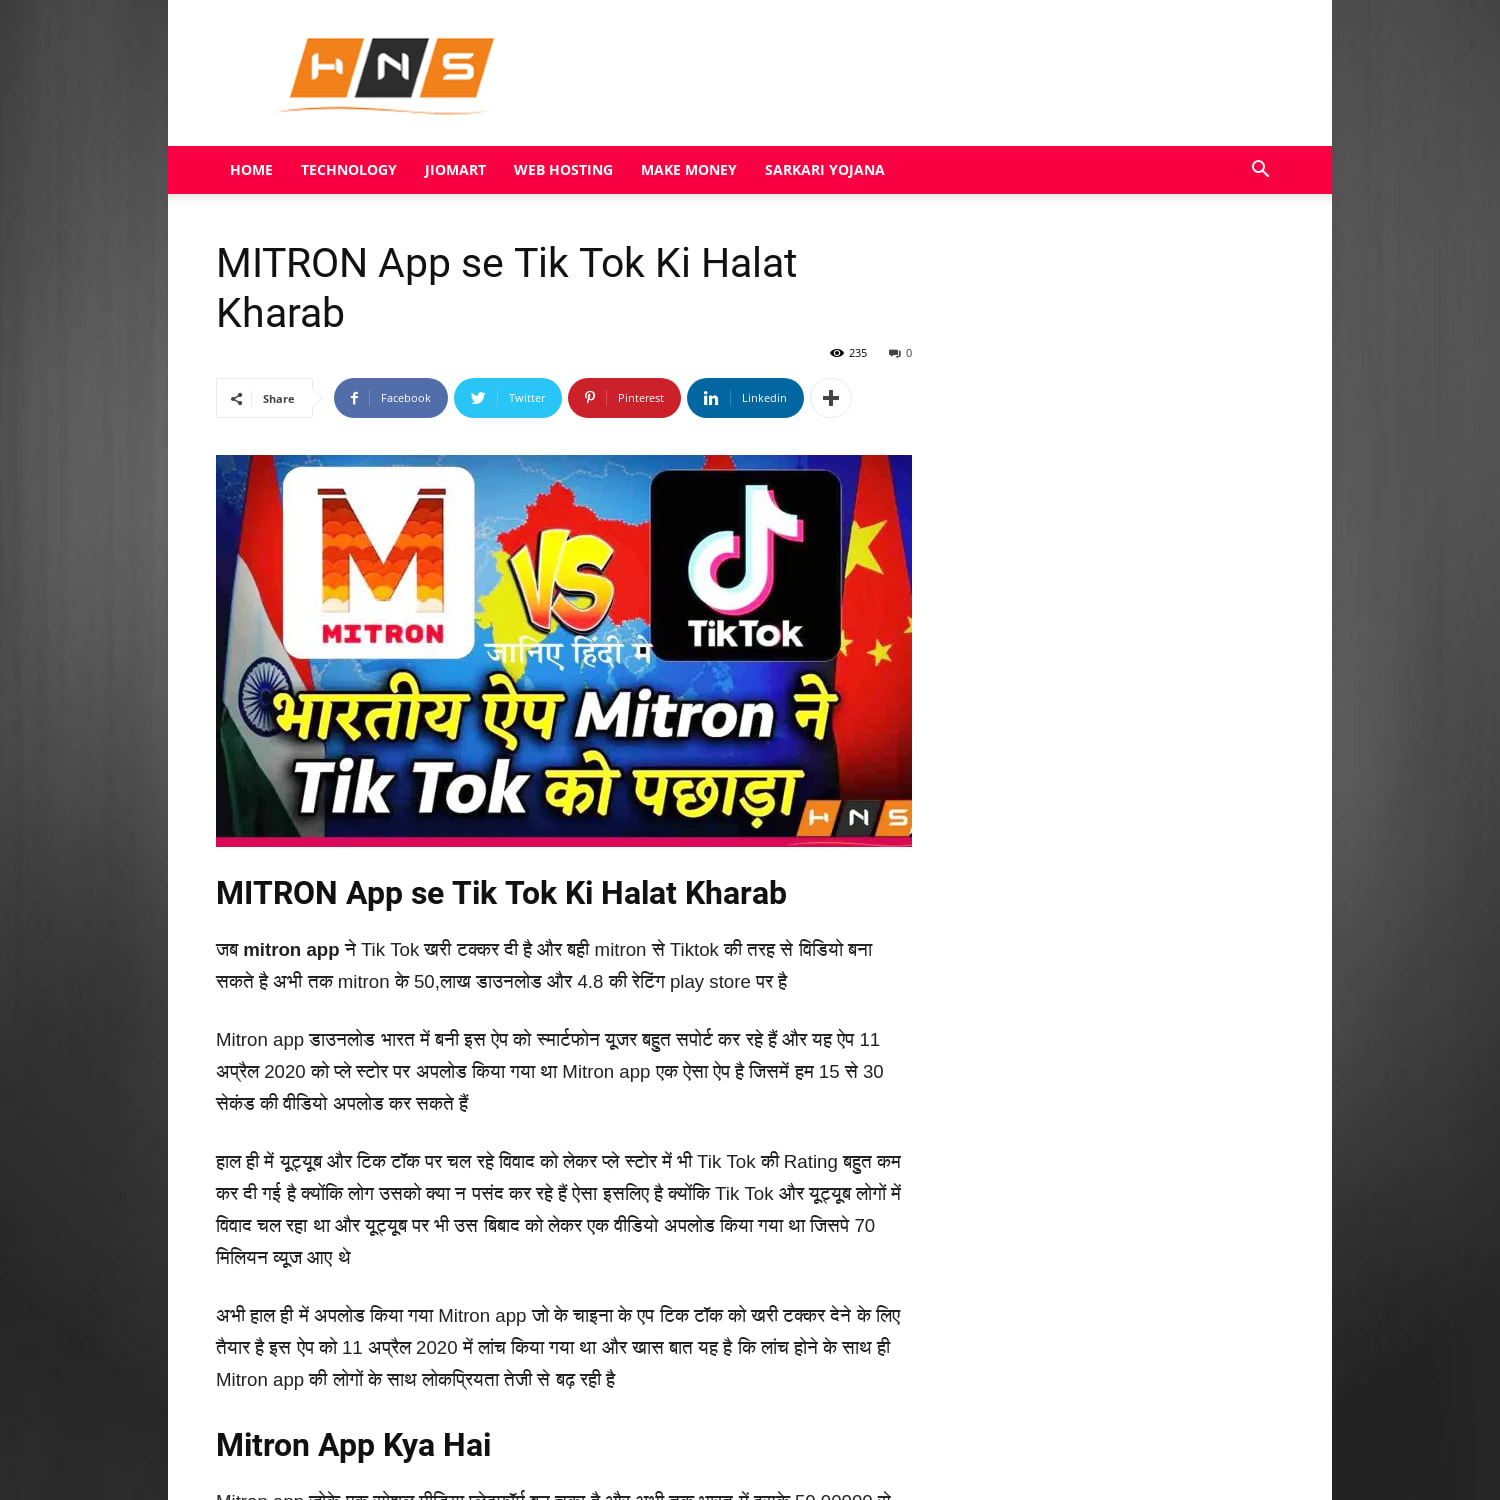 MITRON App se Tik Tok Ki Halat Kharab